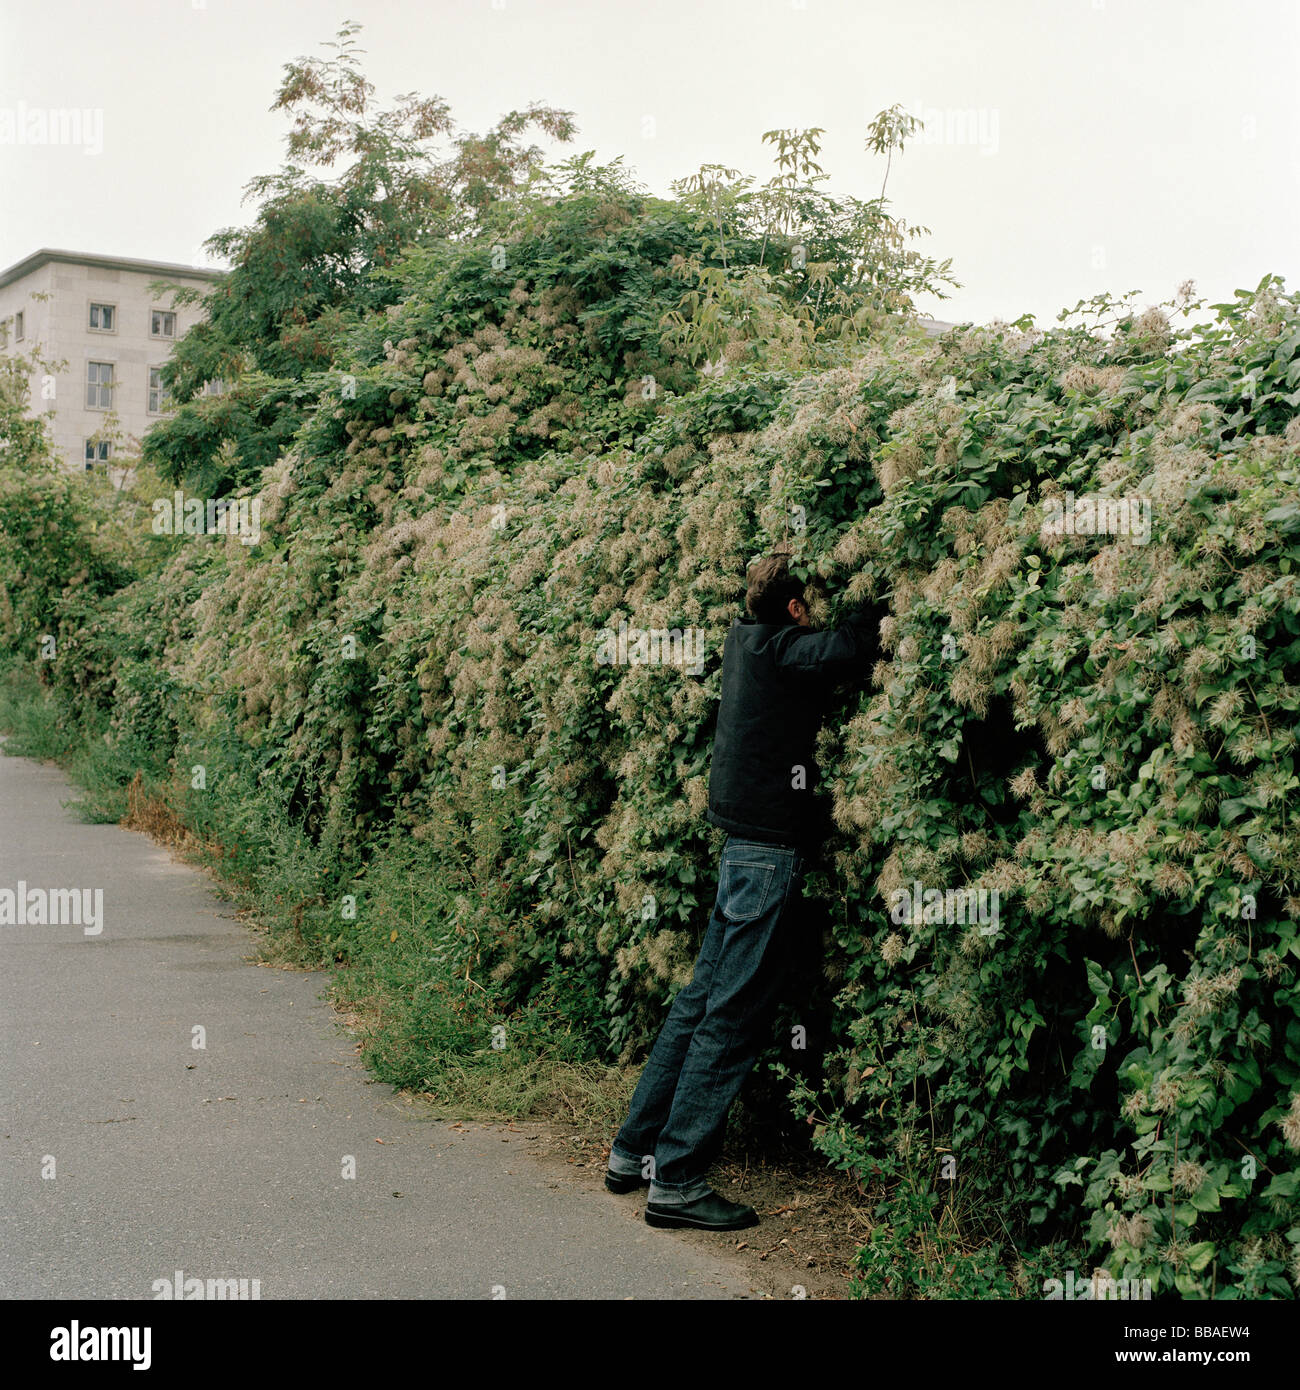 A man reaching into bushes Stock Photo